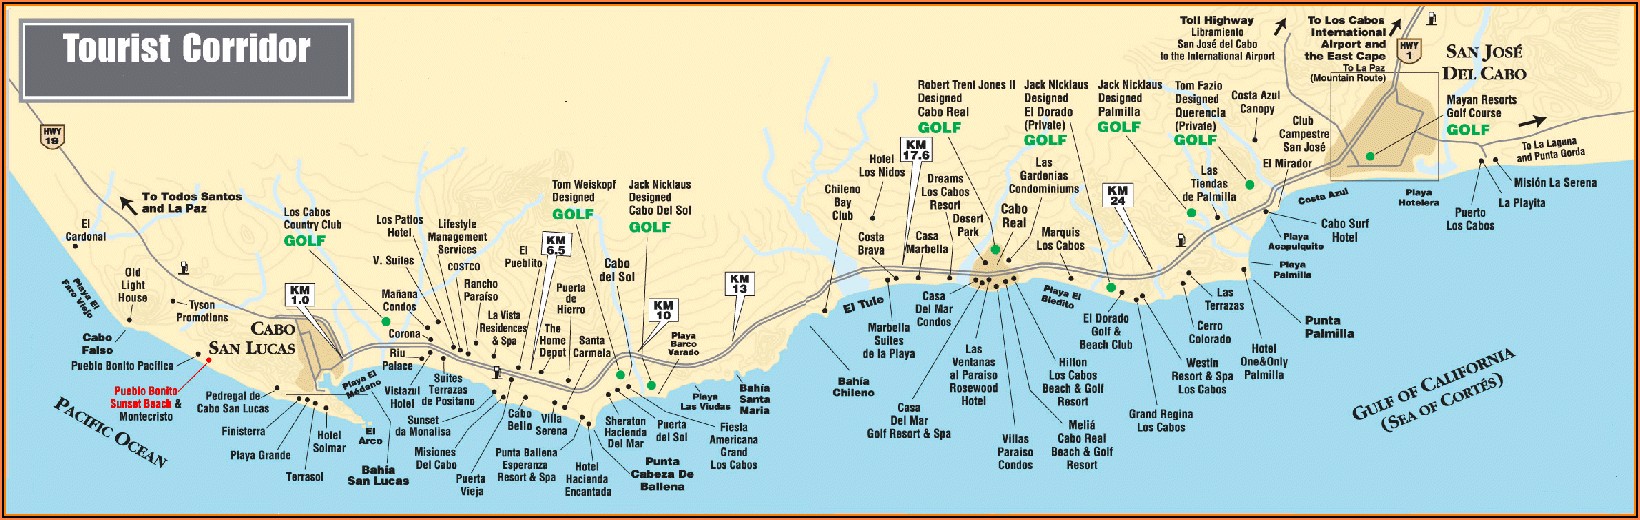 Los Cabos Hotels Map